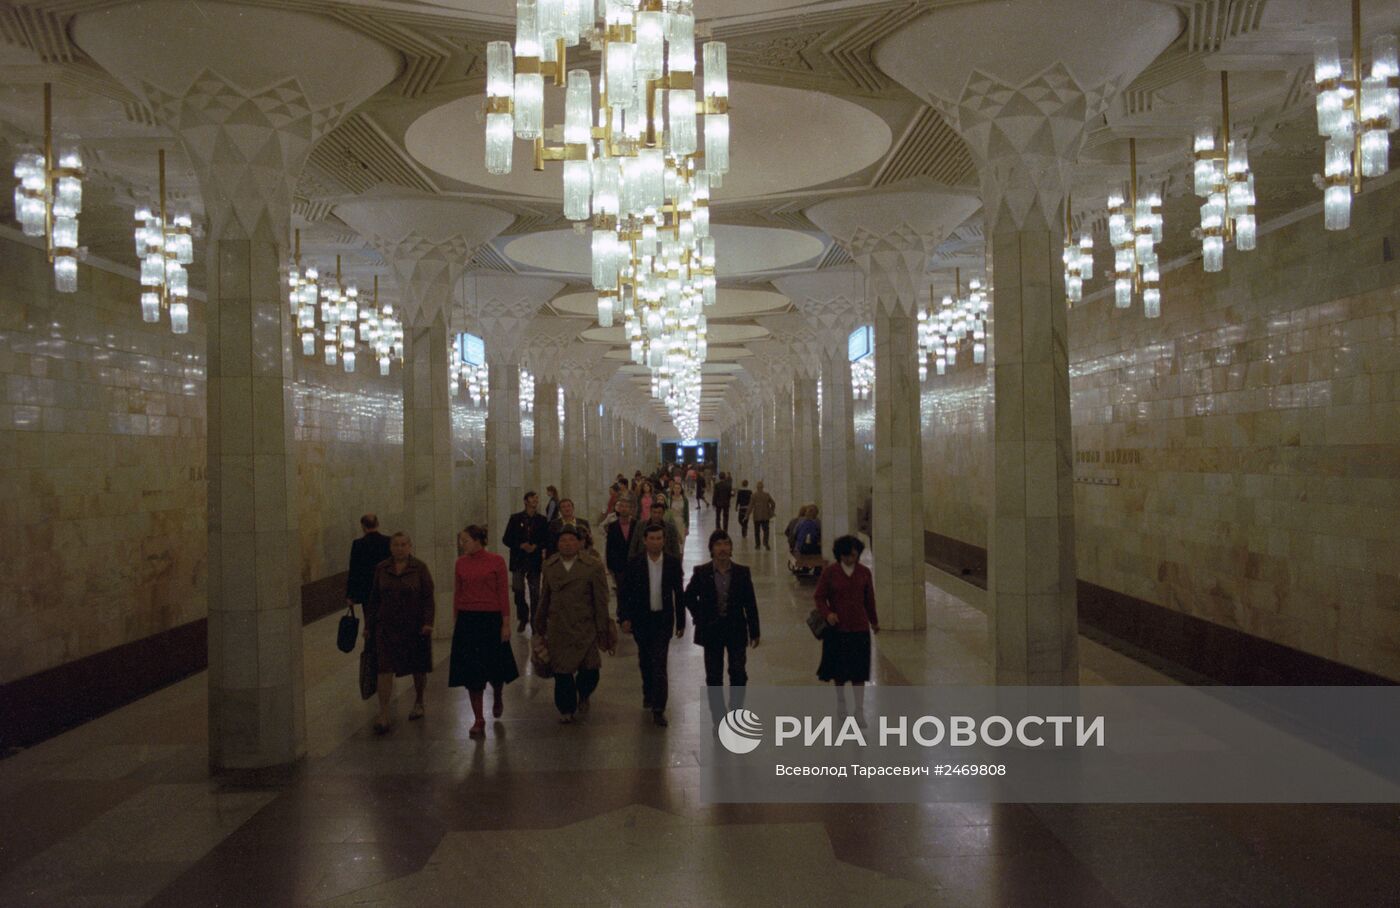 Станция метро "Пушкинская" в Ташкенте